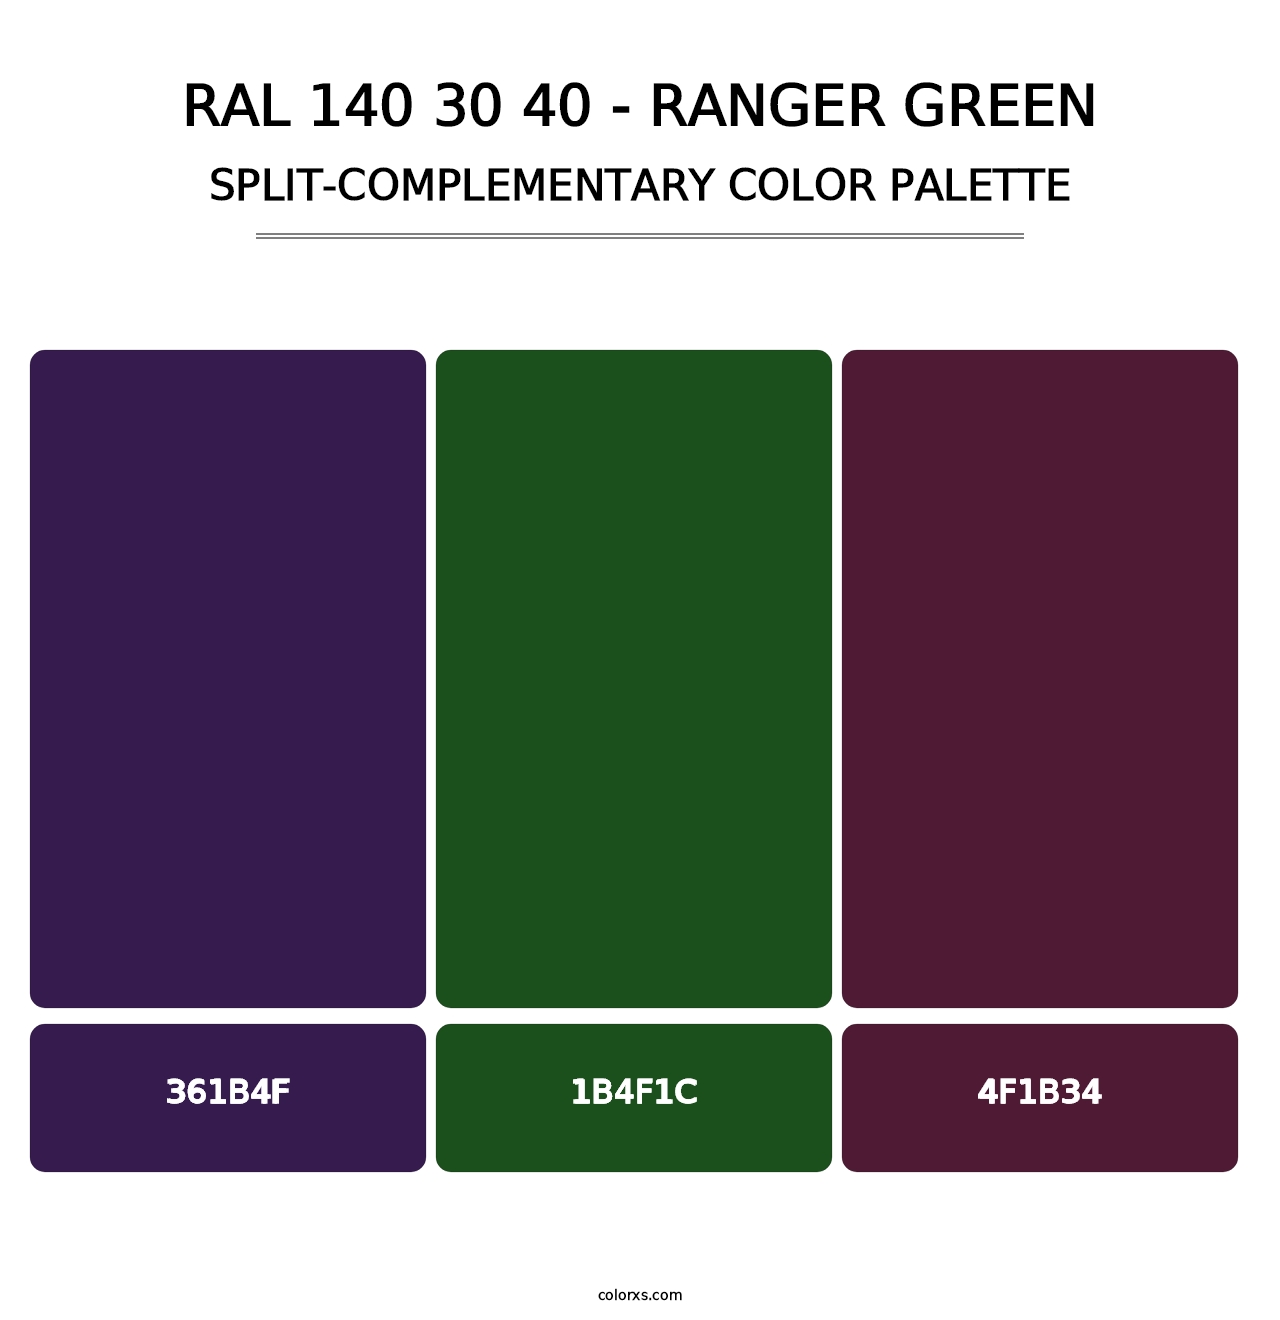 RAL 140 30 40 - Ranger Green - Split-Complementary Color Palette